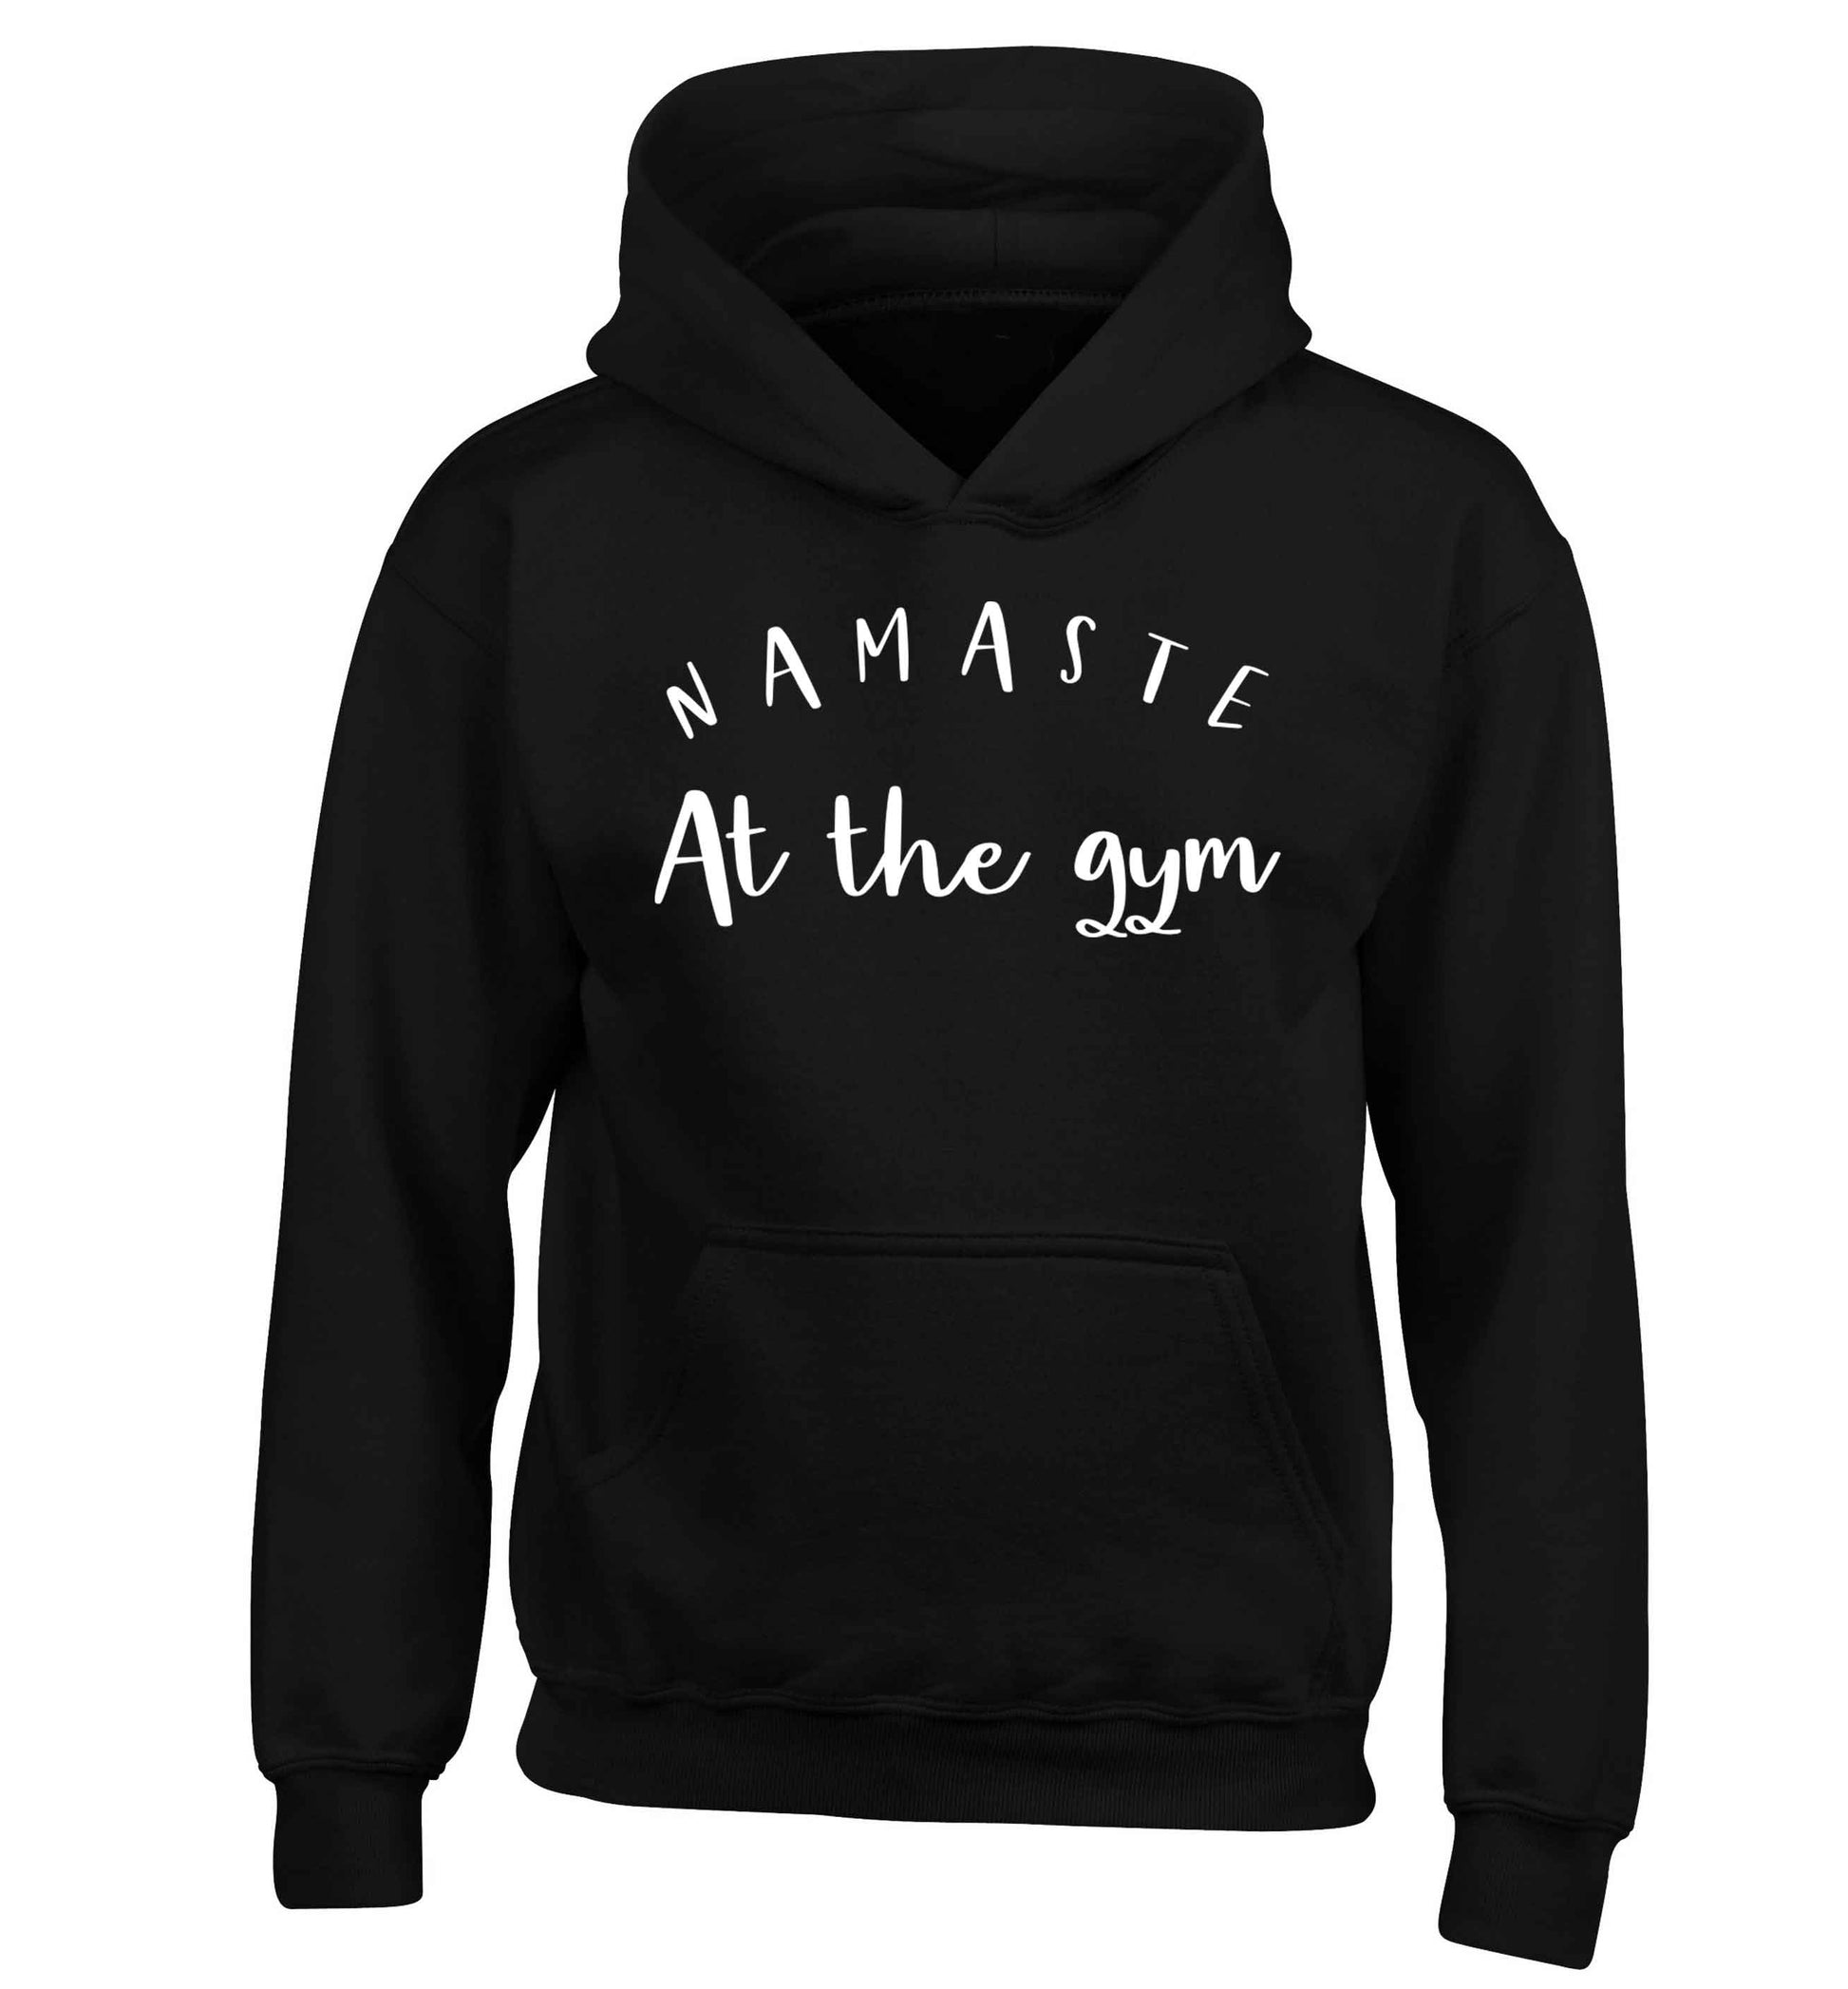 Namaste at the gym children's black hoodie 12-13 Years